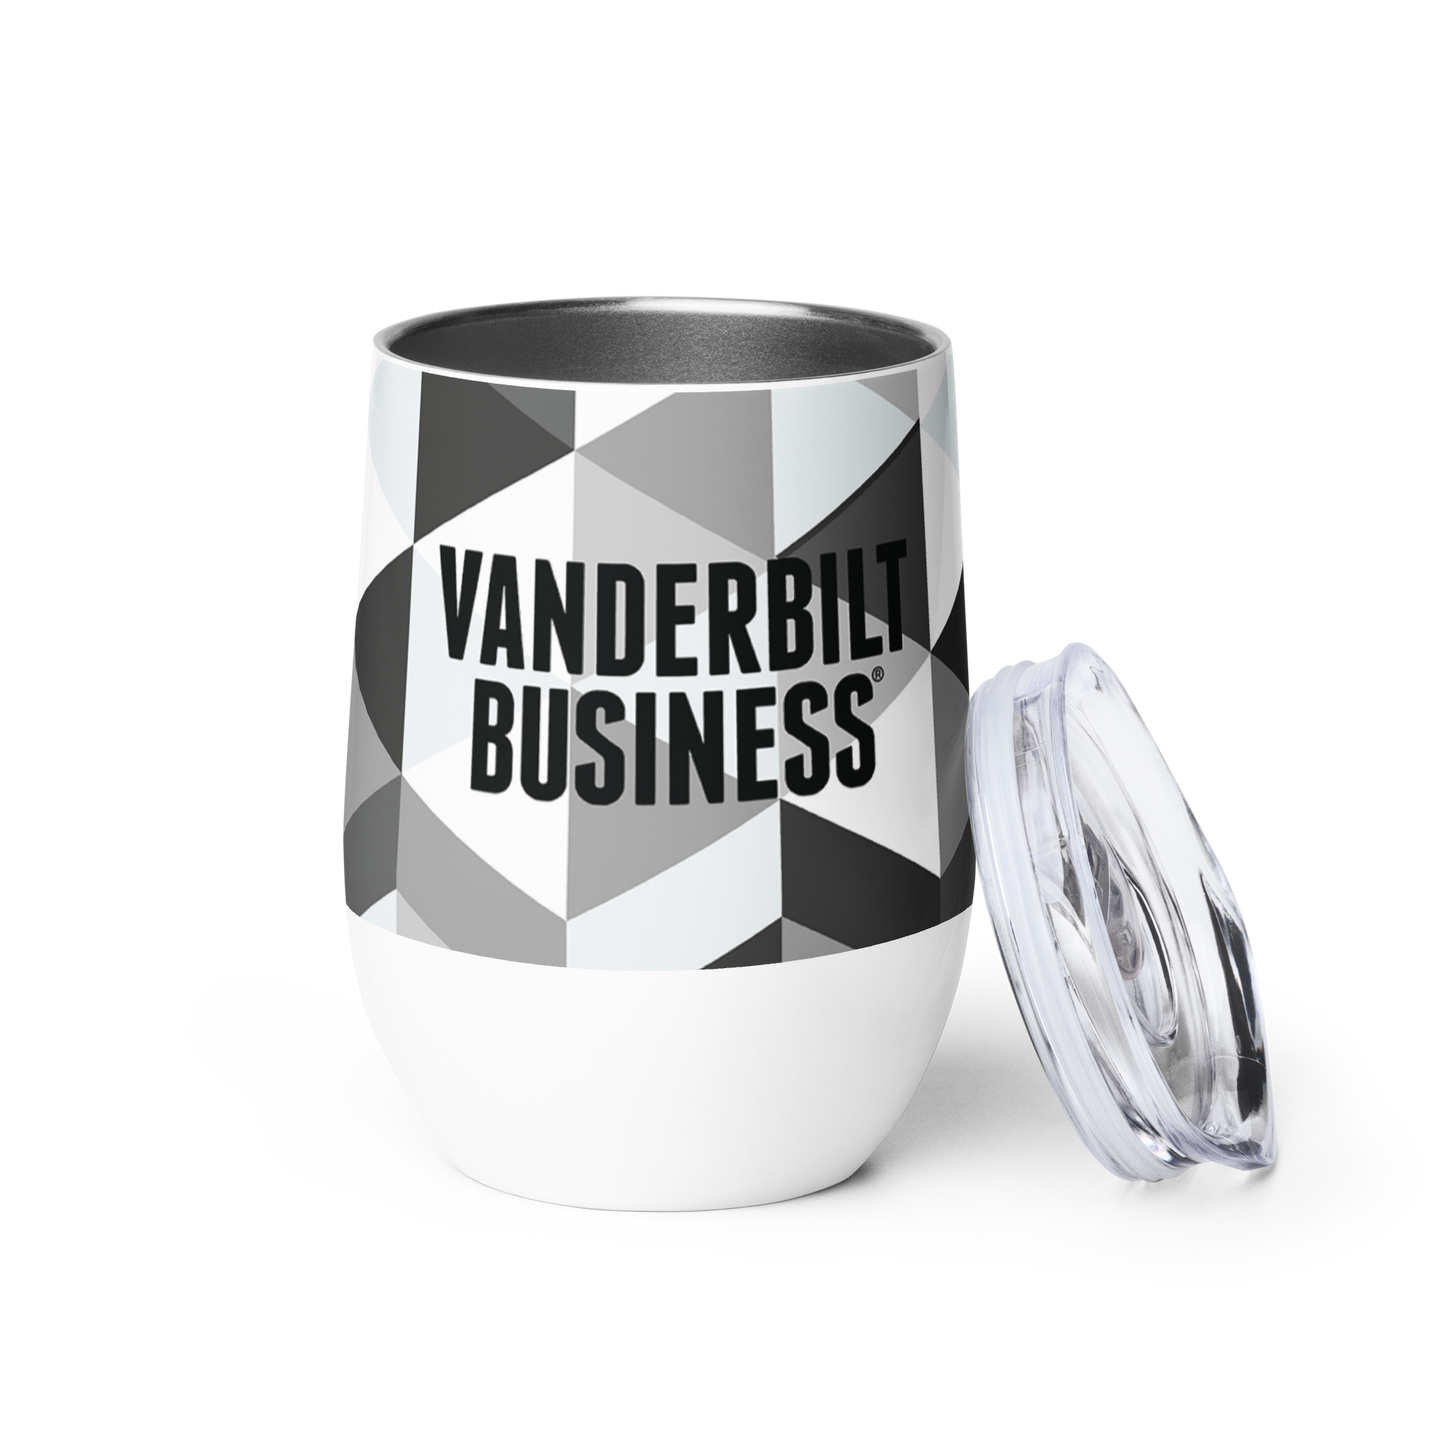 Vanderbilt Business Wine tumbler